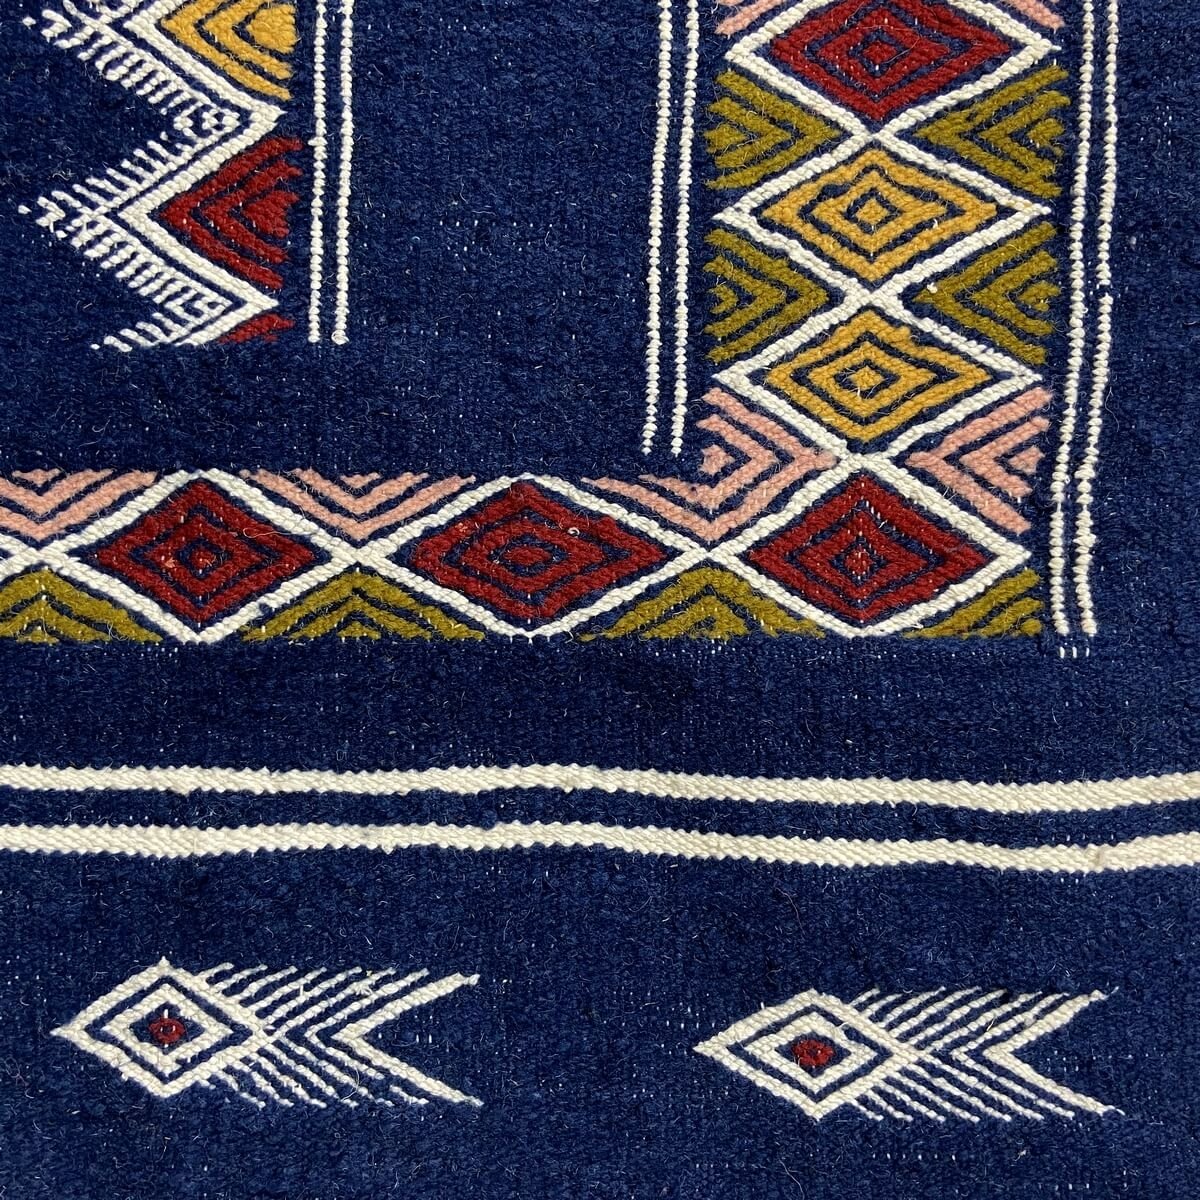 Tapete berbere Tapete Kilim Laarbi 135x235 Azul (Tecidos à mão, Lã) Tapete tunisiano kilim, estilo marroquino. Tapete retangular